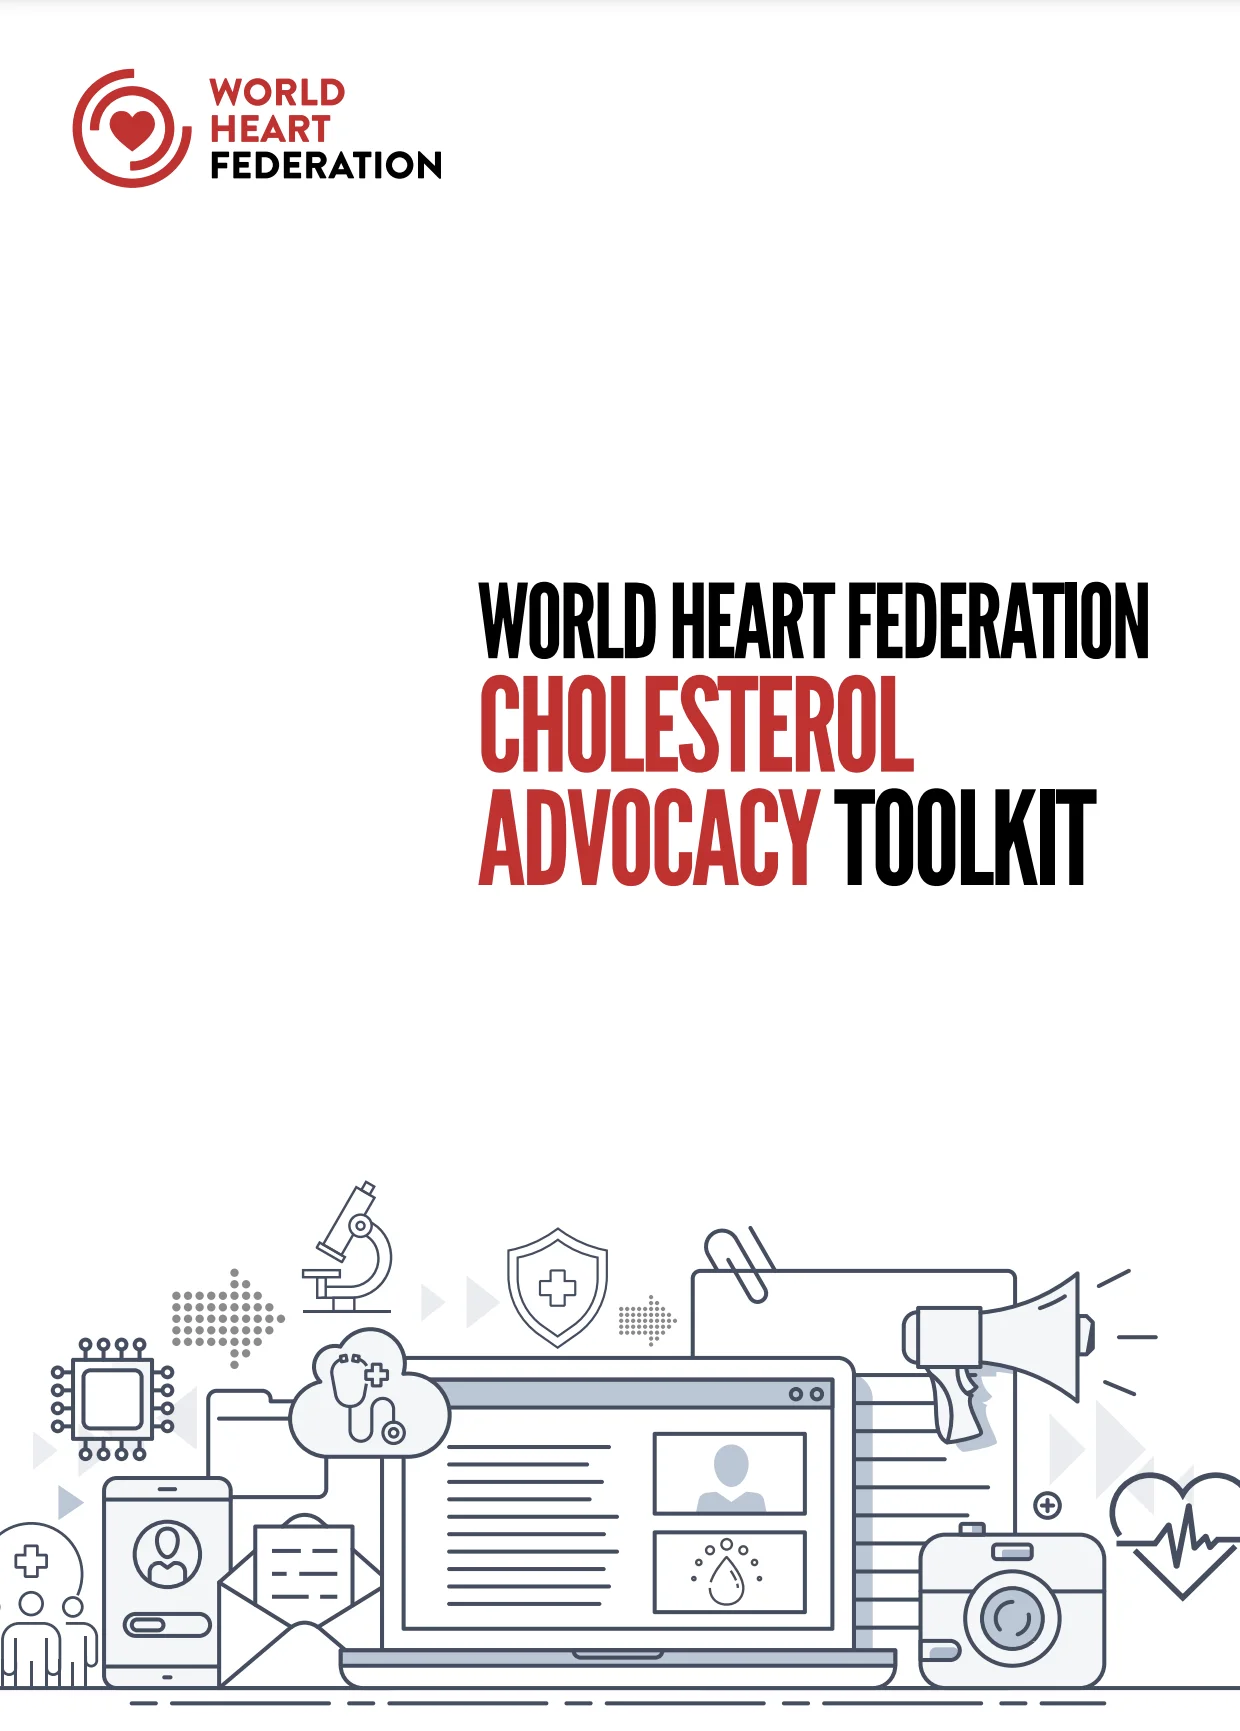 World Heart Federation Cholesterol Advocacy Toolkit